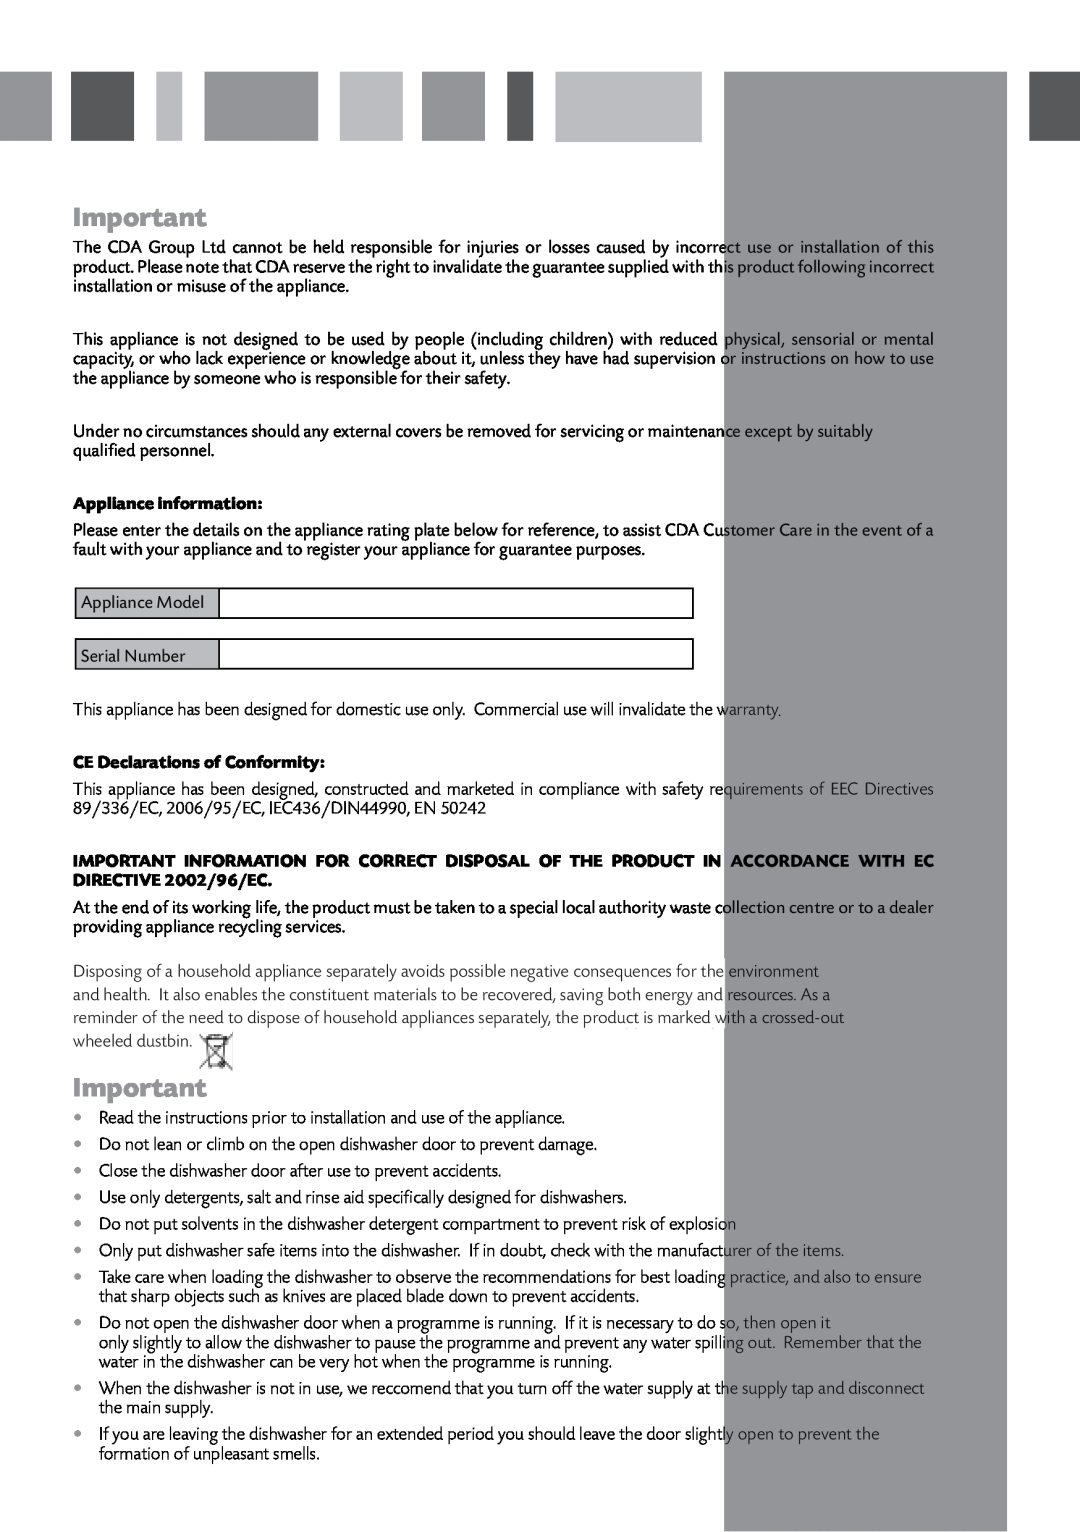 CDA WF140 manual Appliance information, CE Declarations of Conformity 